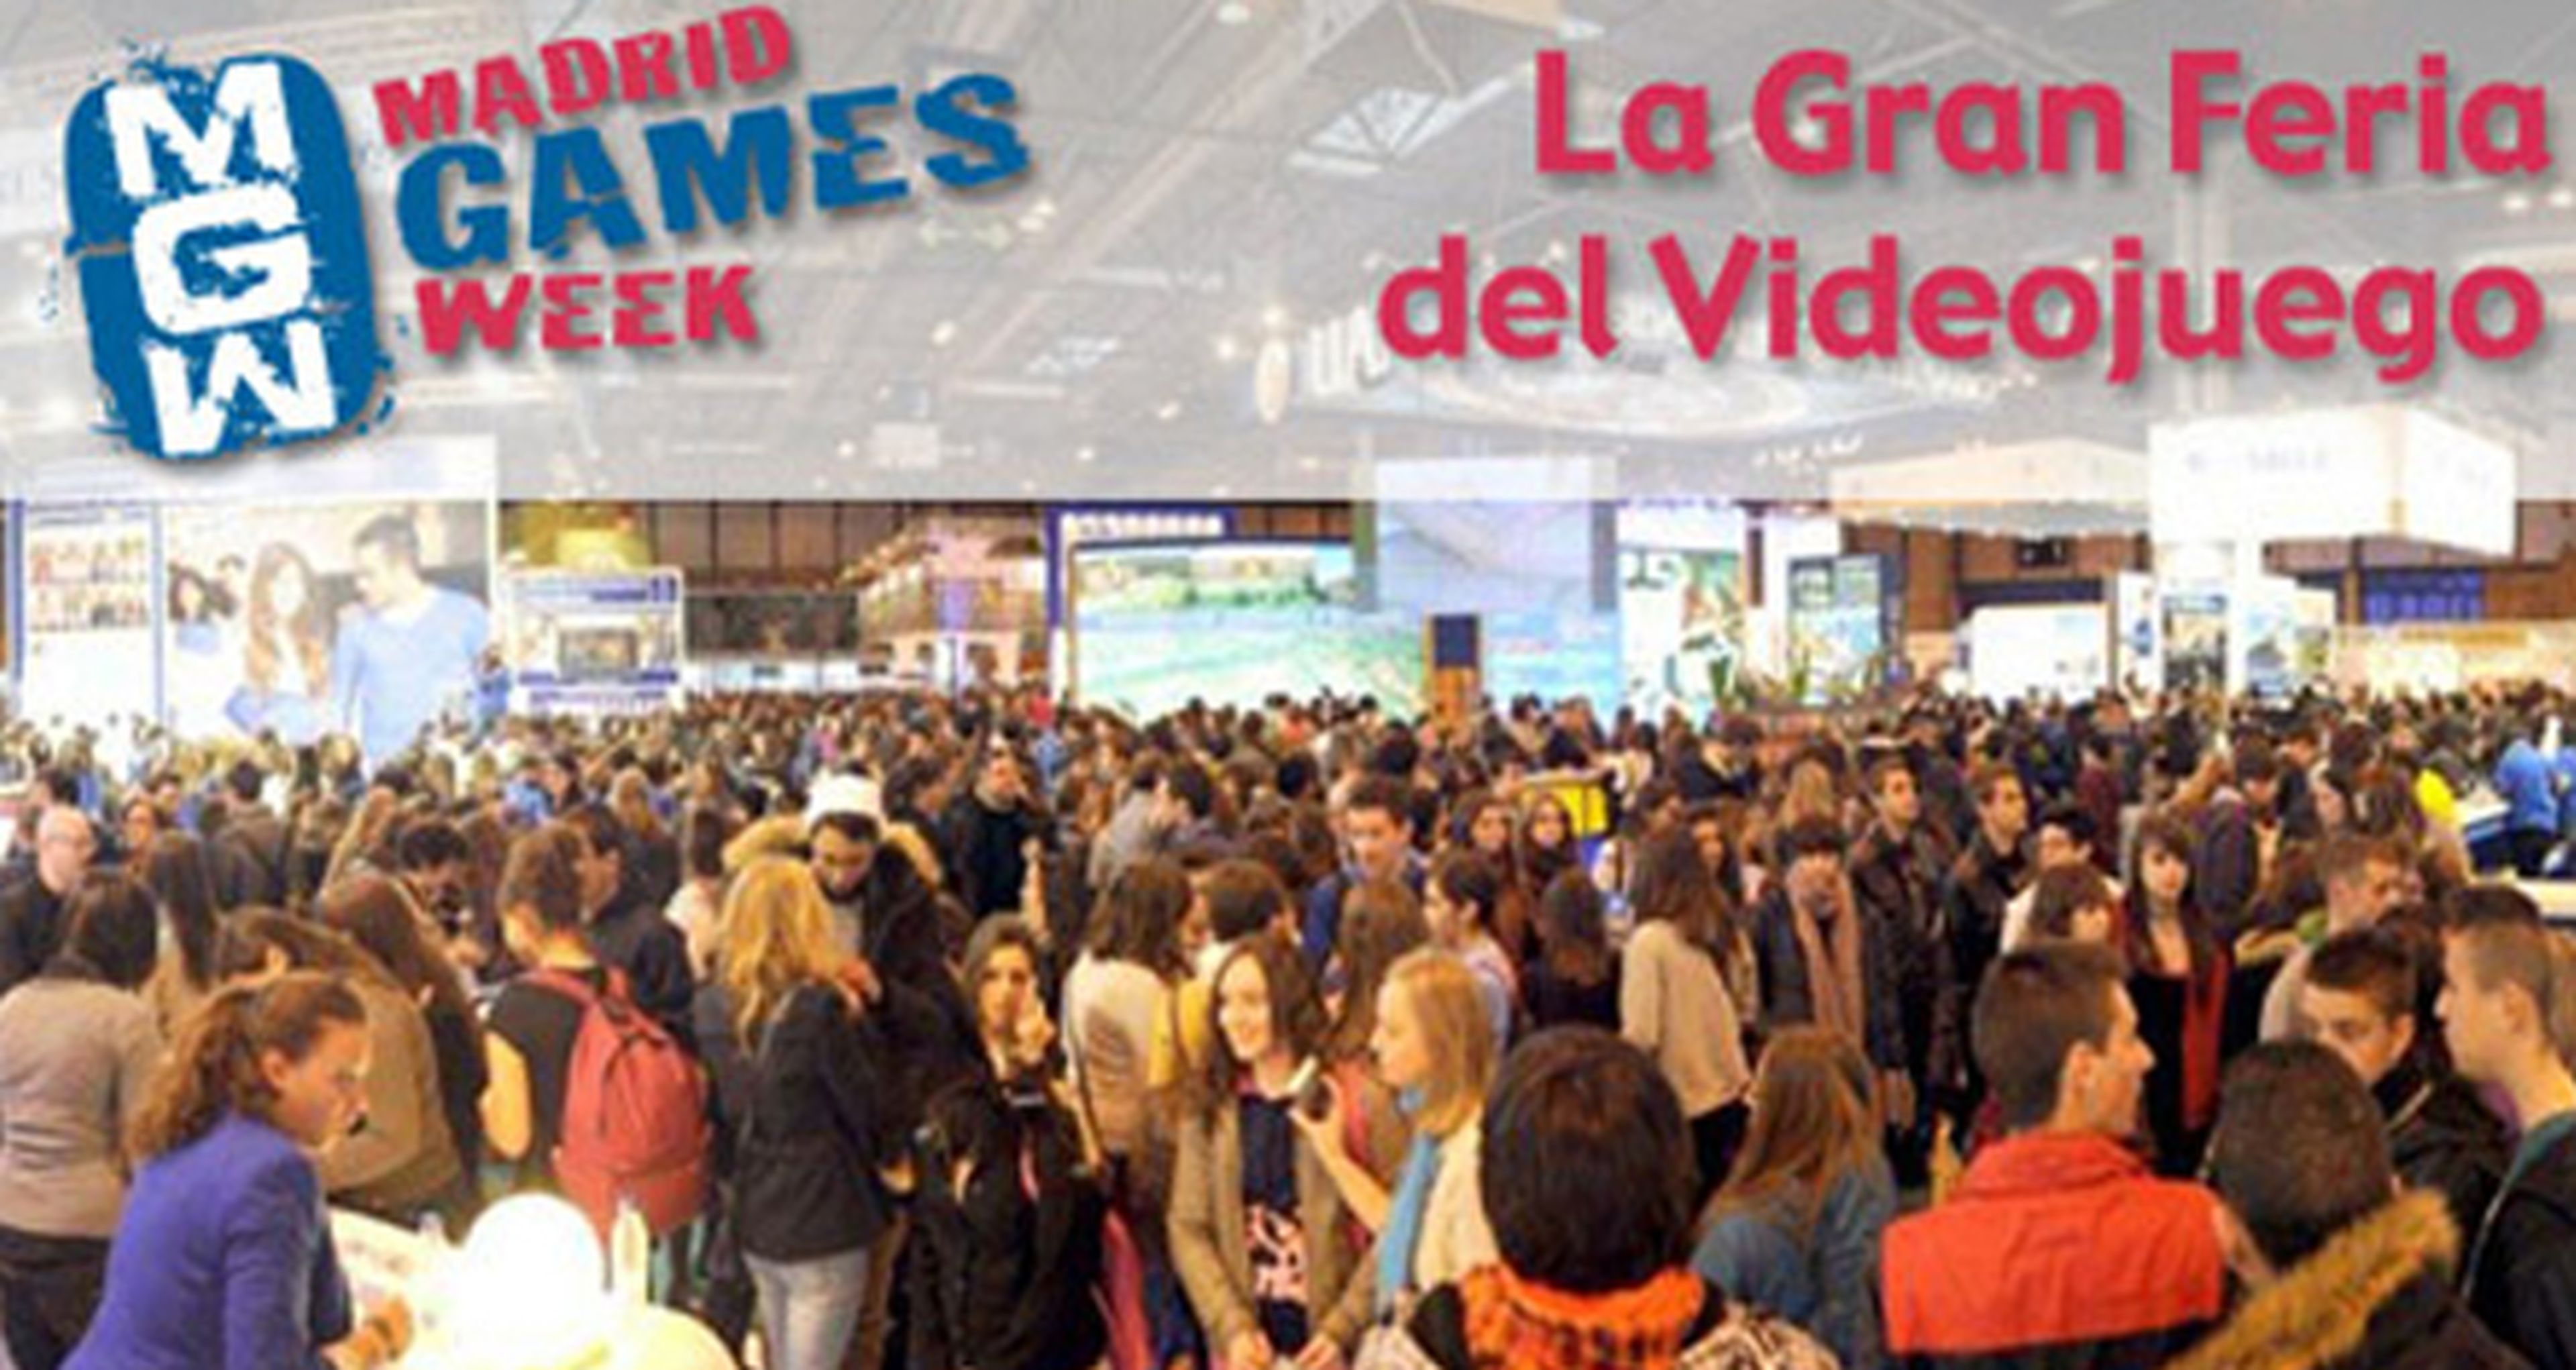 Madrid Games Week 2014: Bate récords de asistencia